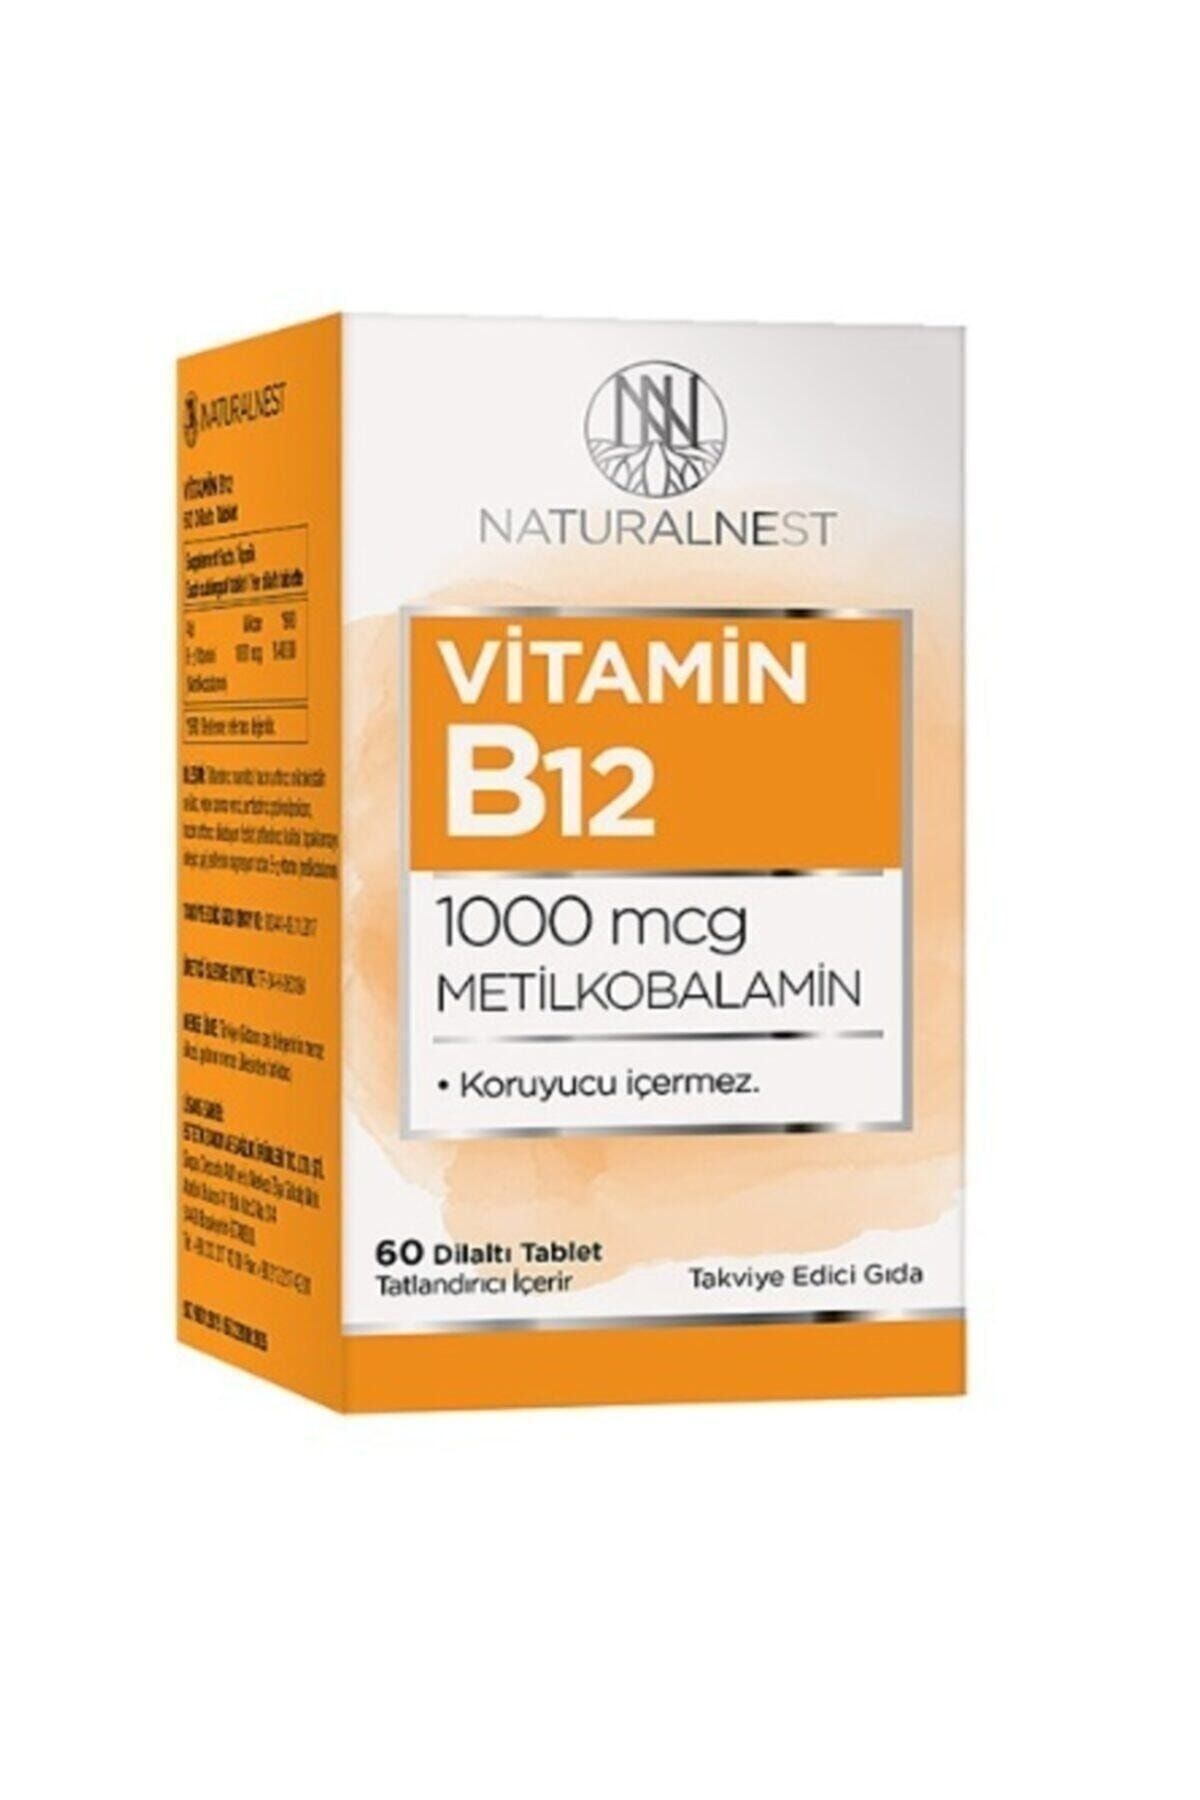 Natural Nest Vitamin B12 1000 mcg Metilkobalamin 60 Dilaltı Tablet